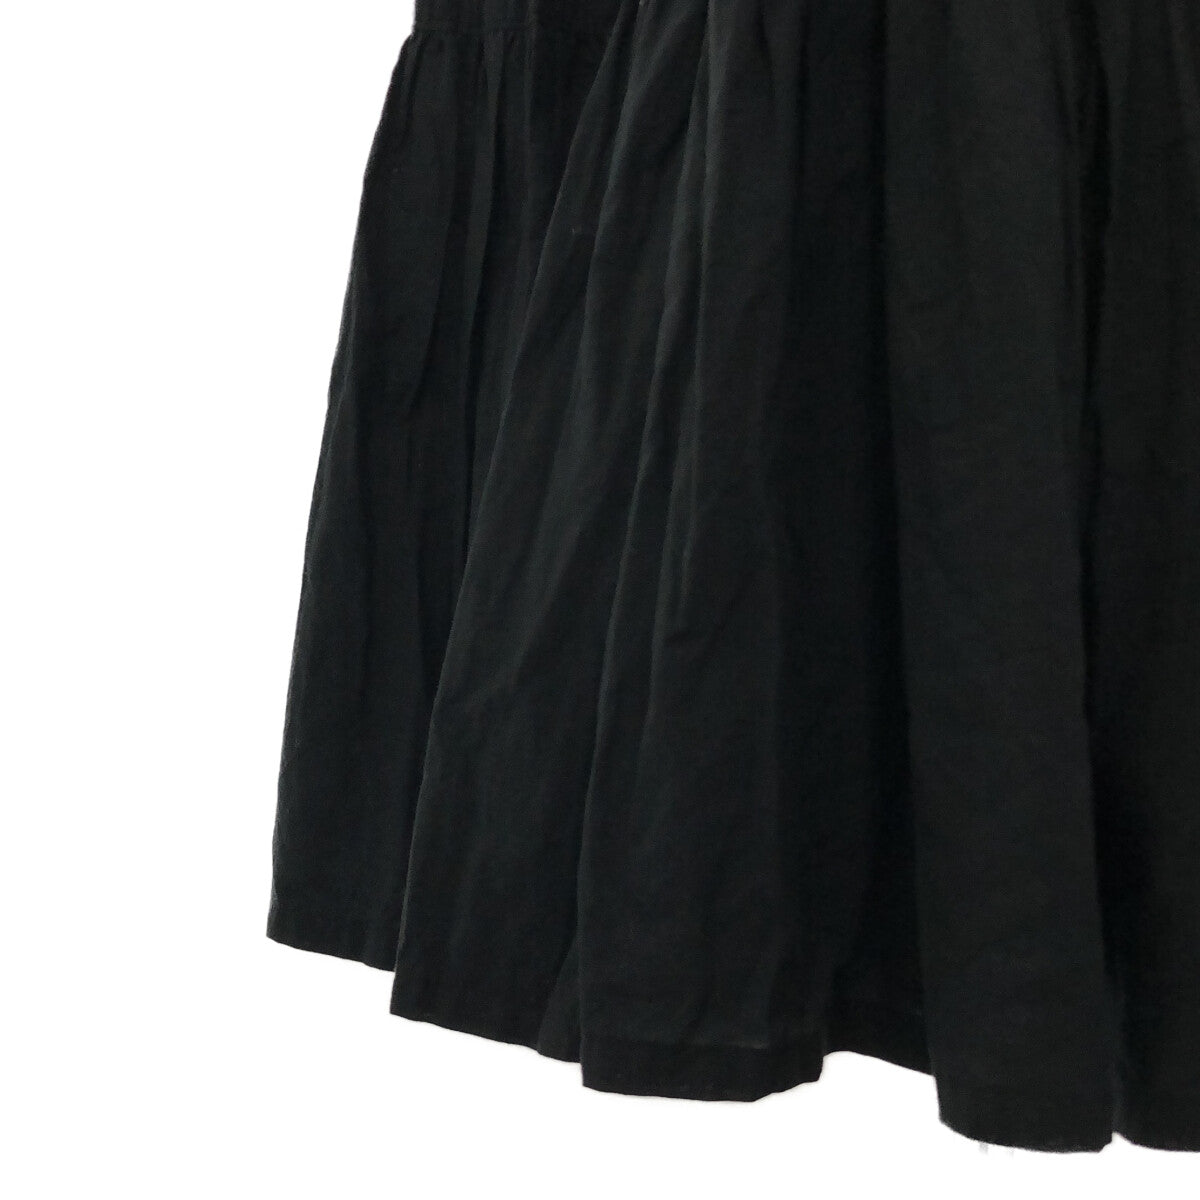 foufou / フーフー | THE DRESS raglan sleeves tiered dress / ラグランスリーブティアードワンピース | 0 | ブラック | レディースロングワンピース/マキシワンピース